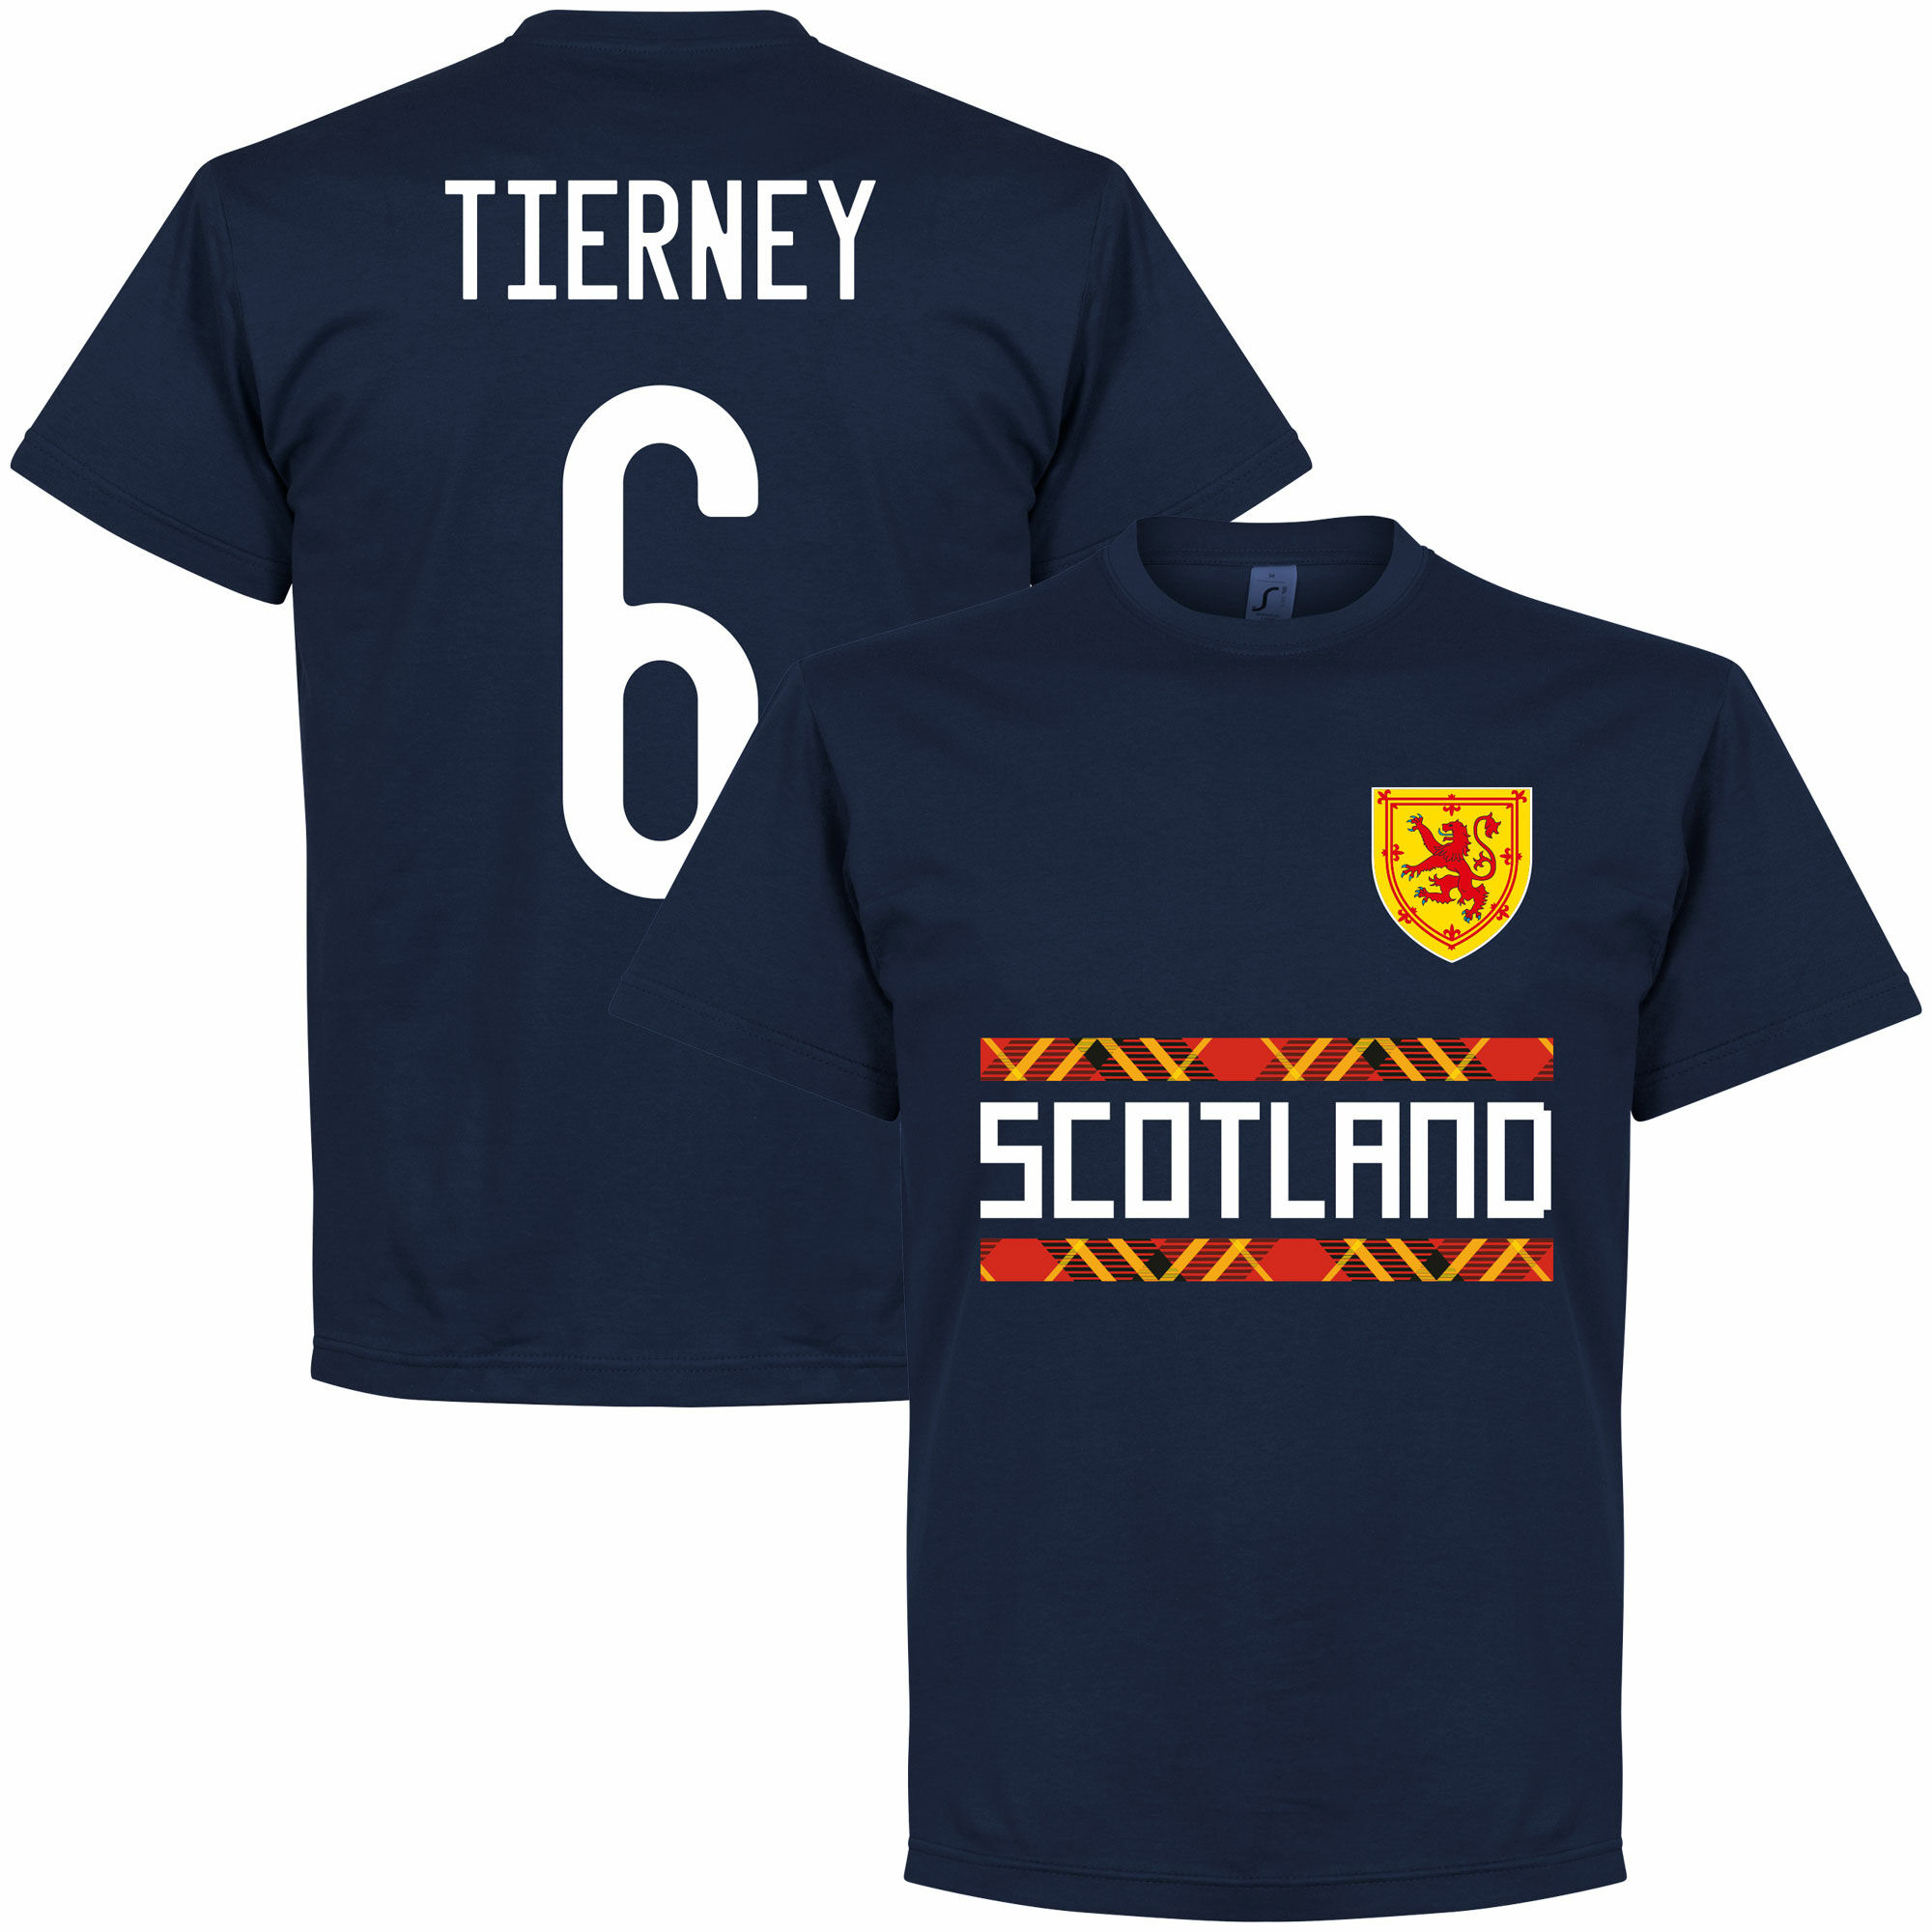 Skotsko - Tričko - číslo 6, Kieran Tierney, modré